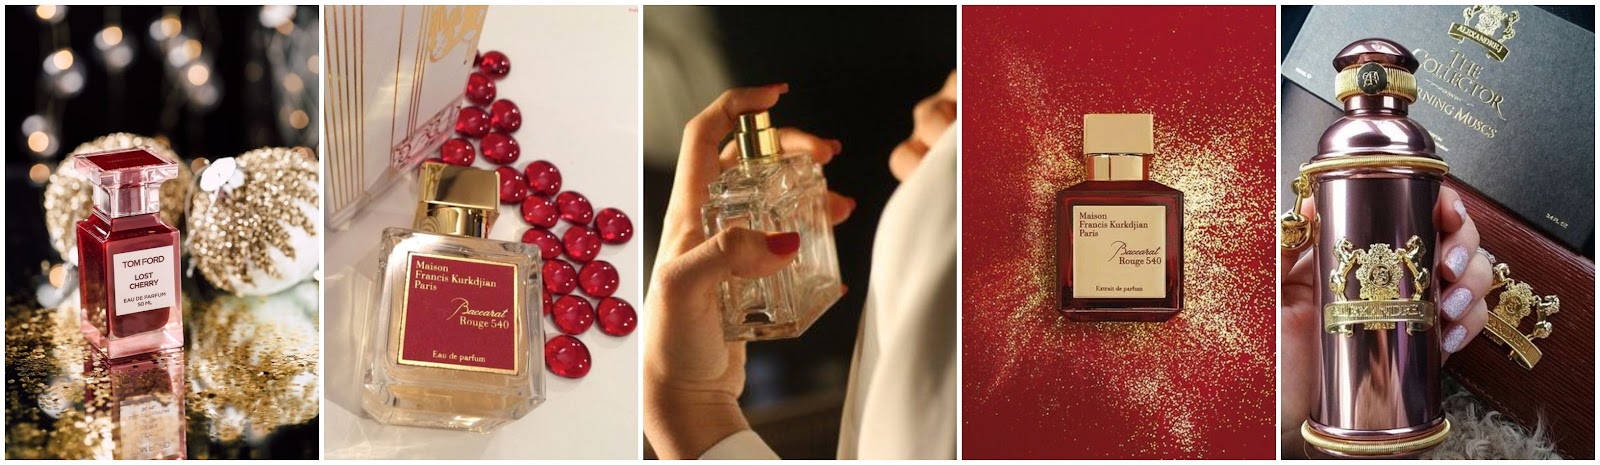 Parfumeria selectivă - nou trend 2020-2021 | Makeup.ro